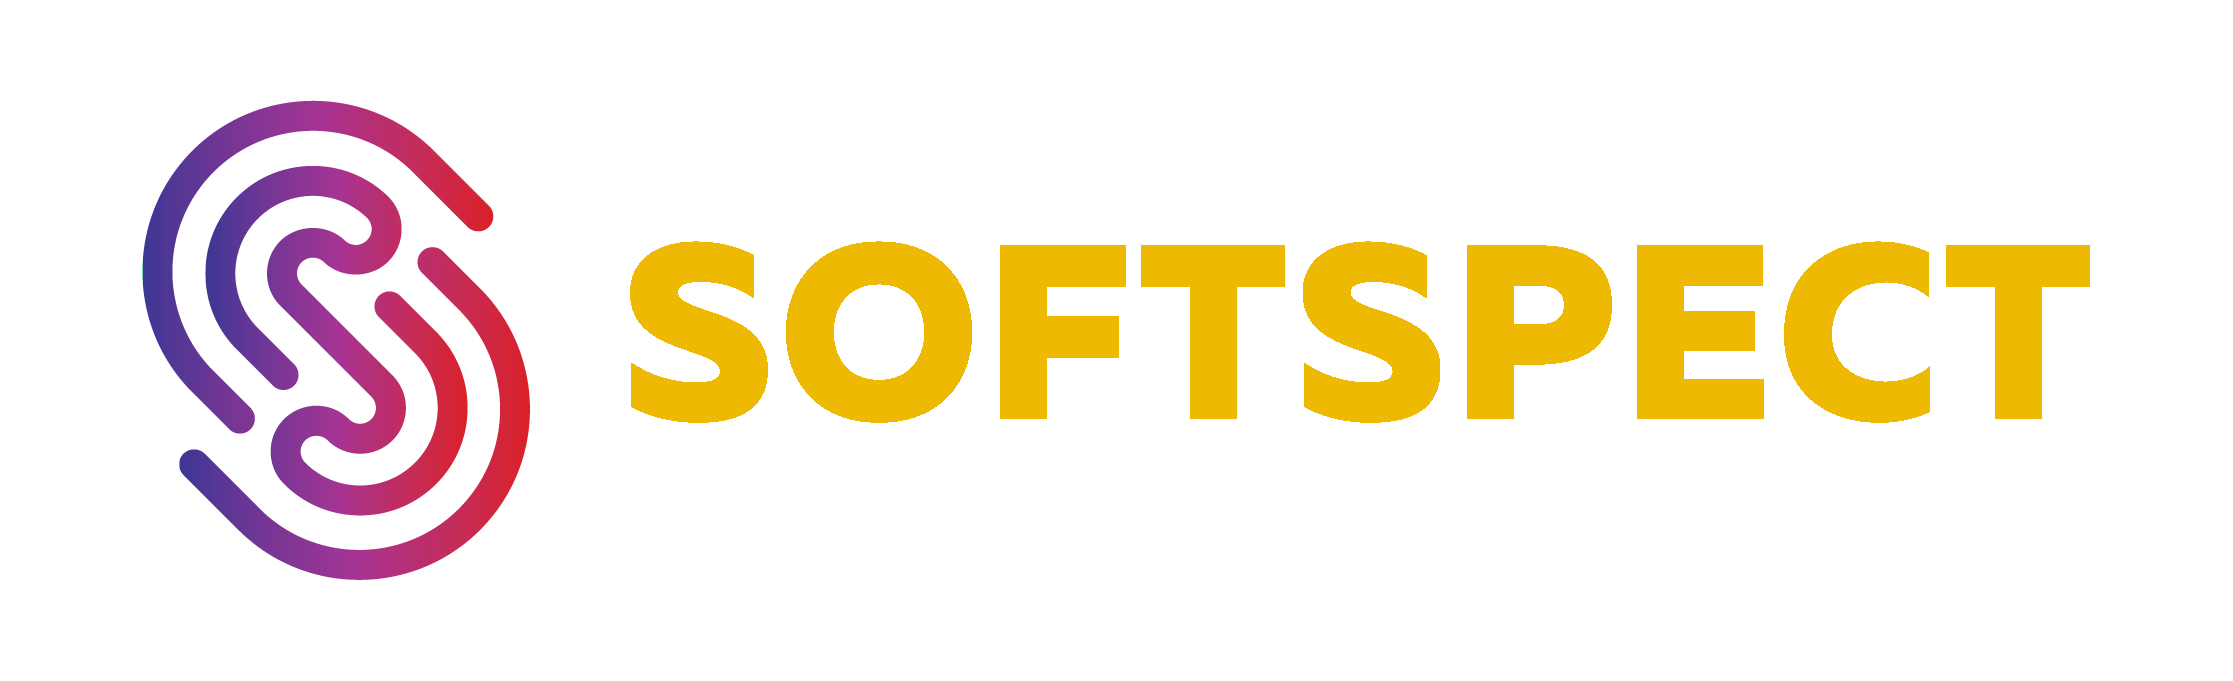 Soft Spect GmbH Logo